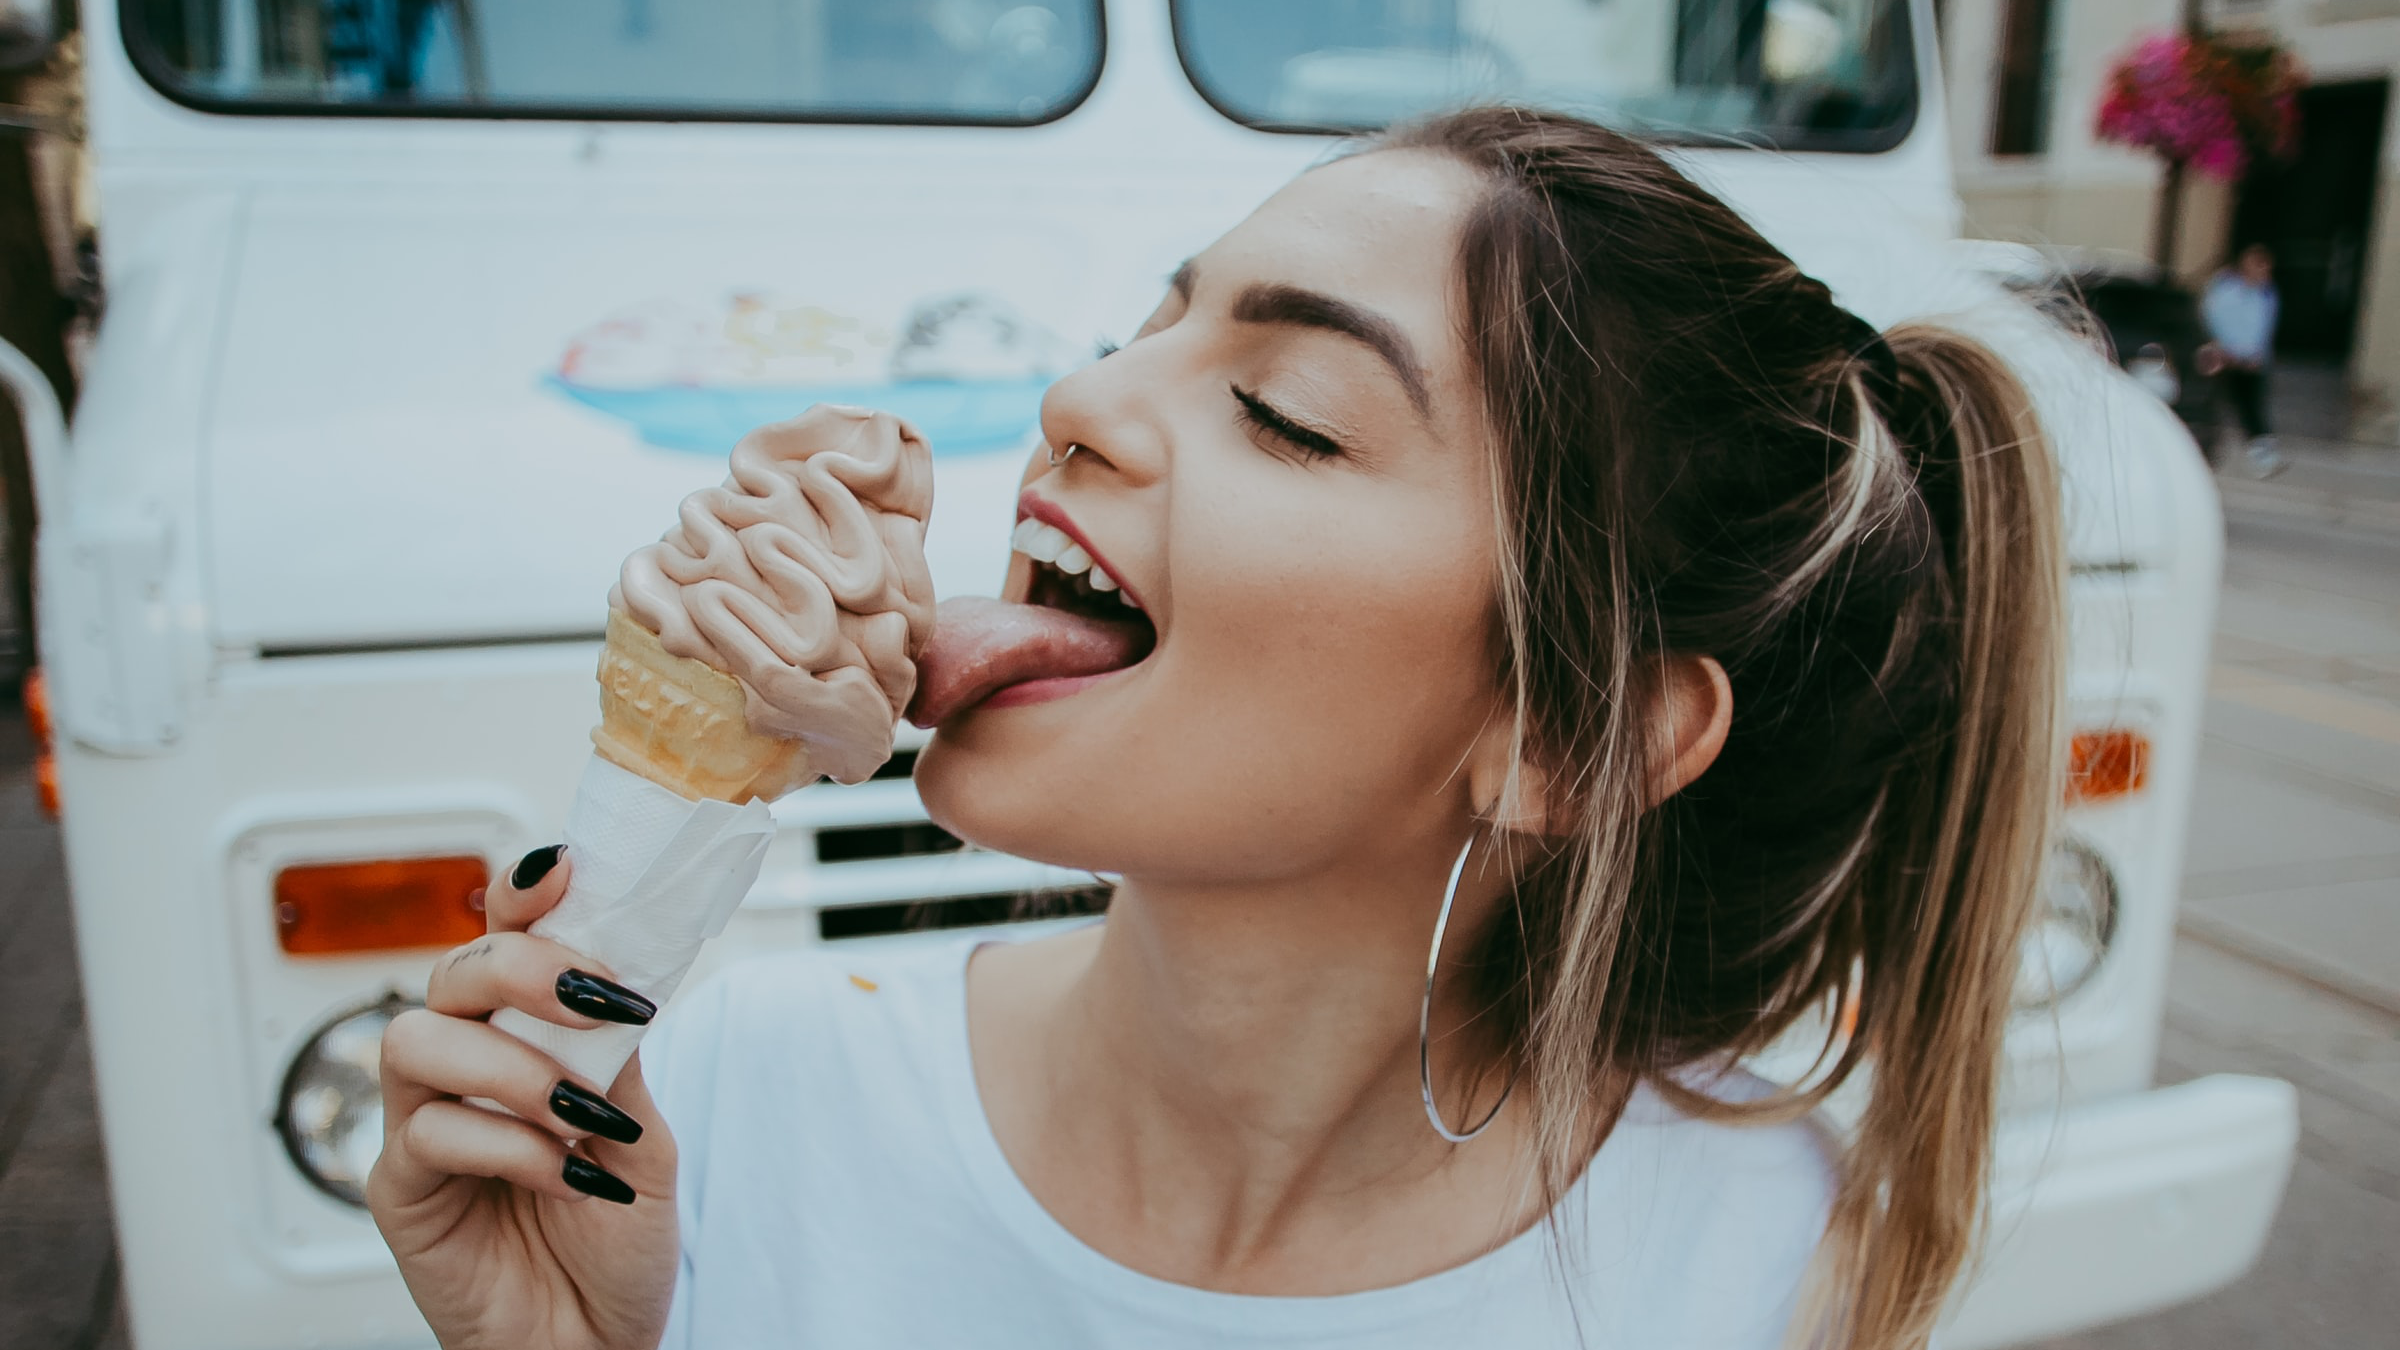 Вкусно ест мороженое. Девушка и мороженое. Девочка с мороженым. Девушка ест. Девушка ест мороженое.